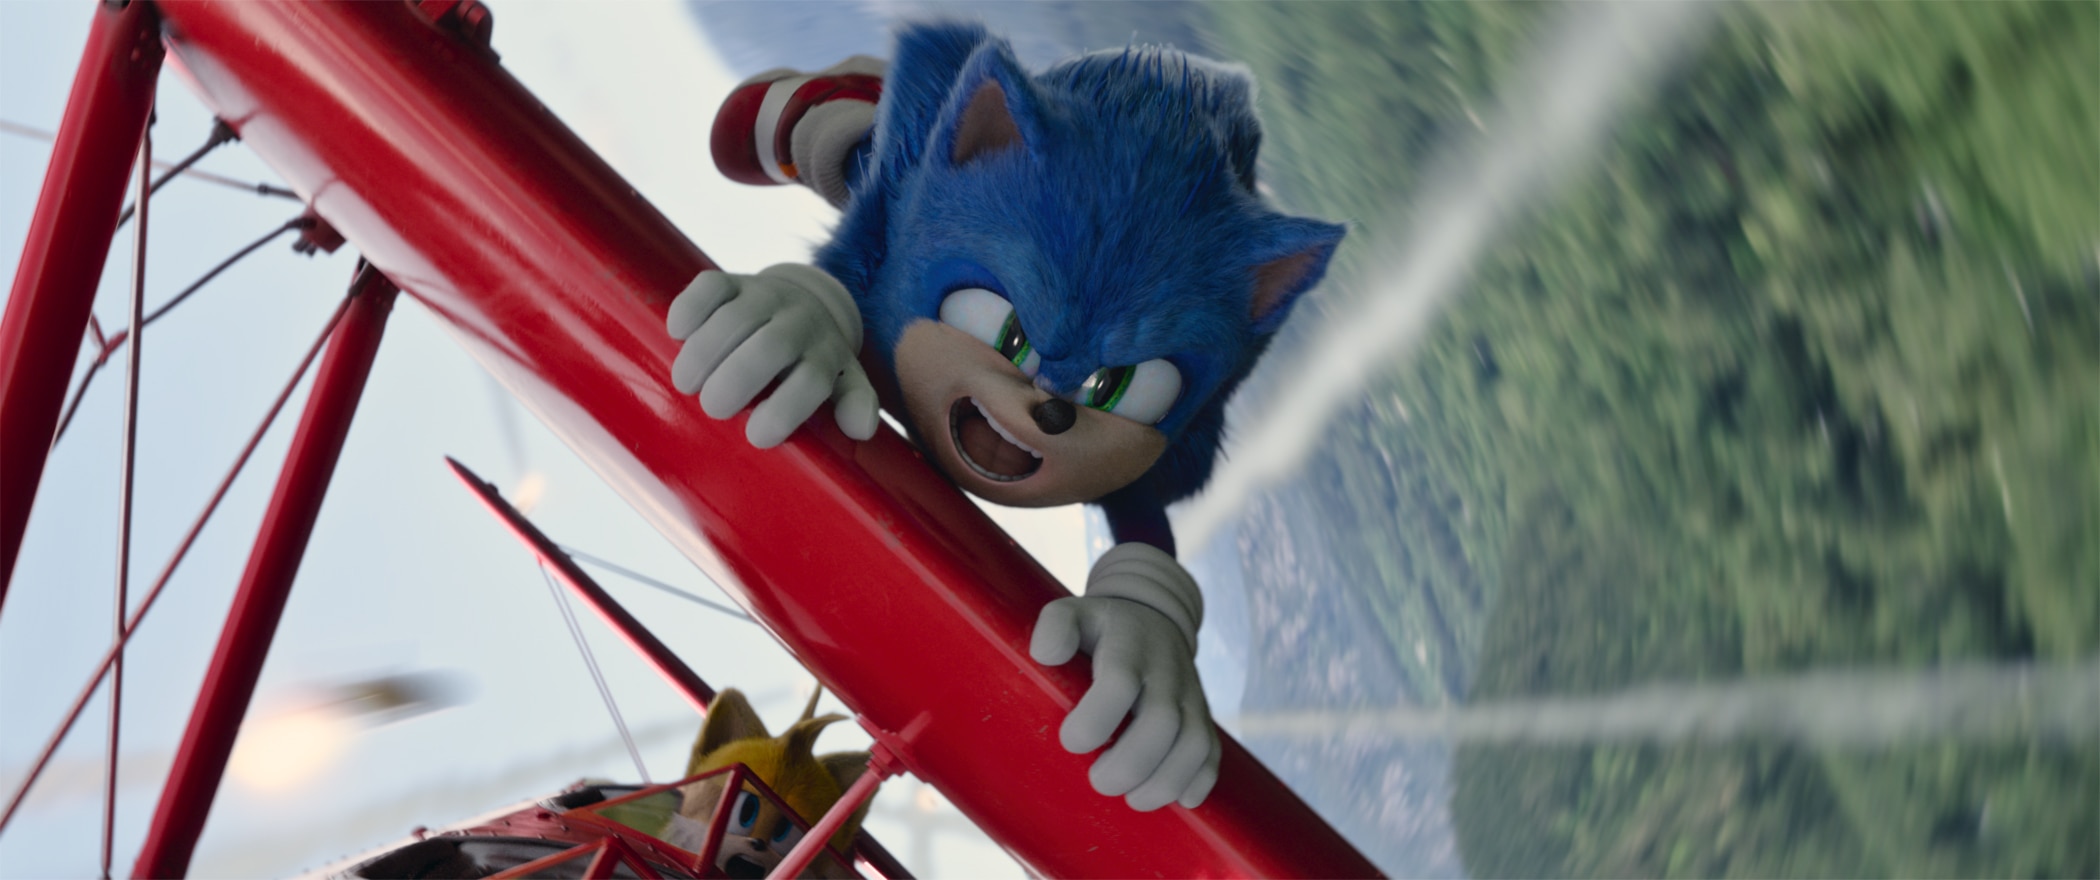 Sonic the Hedgehog 2. Courtesy: Paramount 